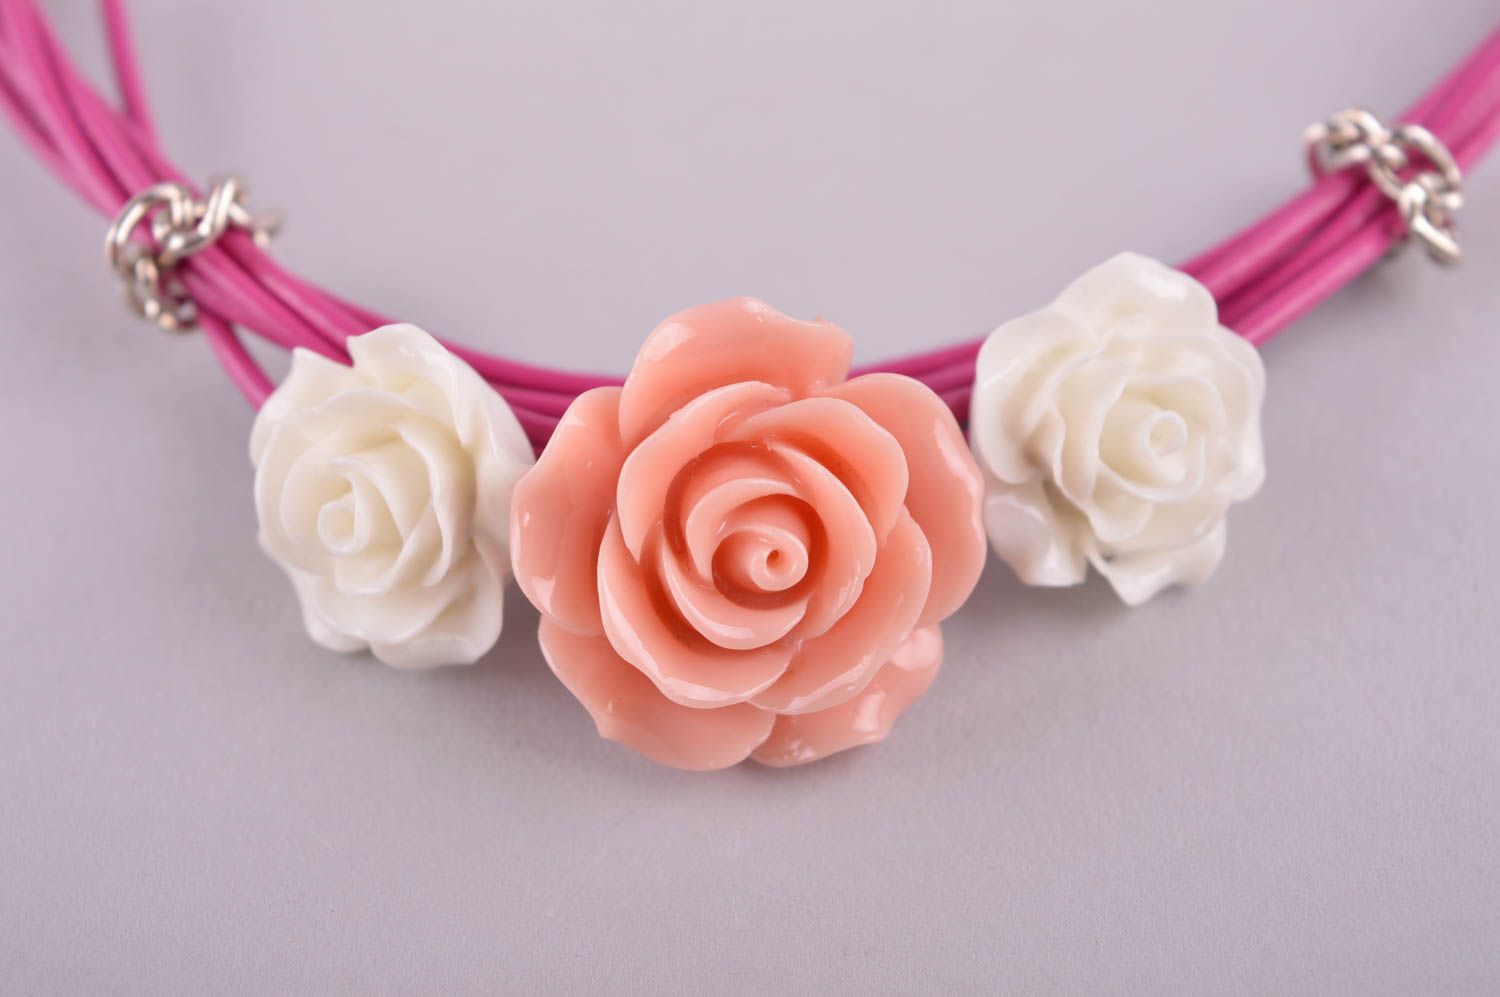 Handmade stylish accessory beautiful pink jewelry cute unusual present photo 3